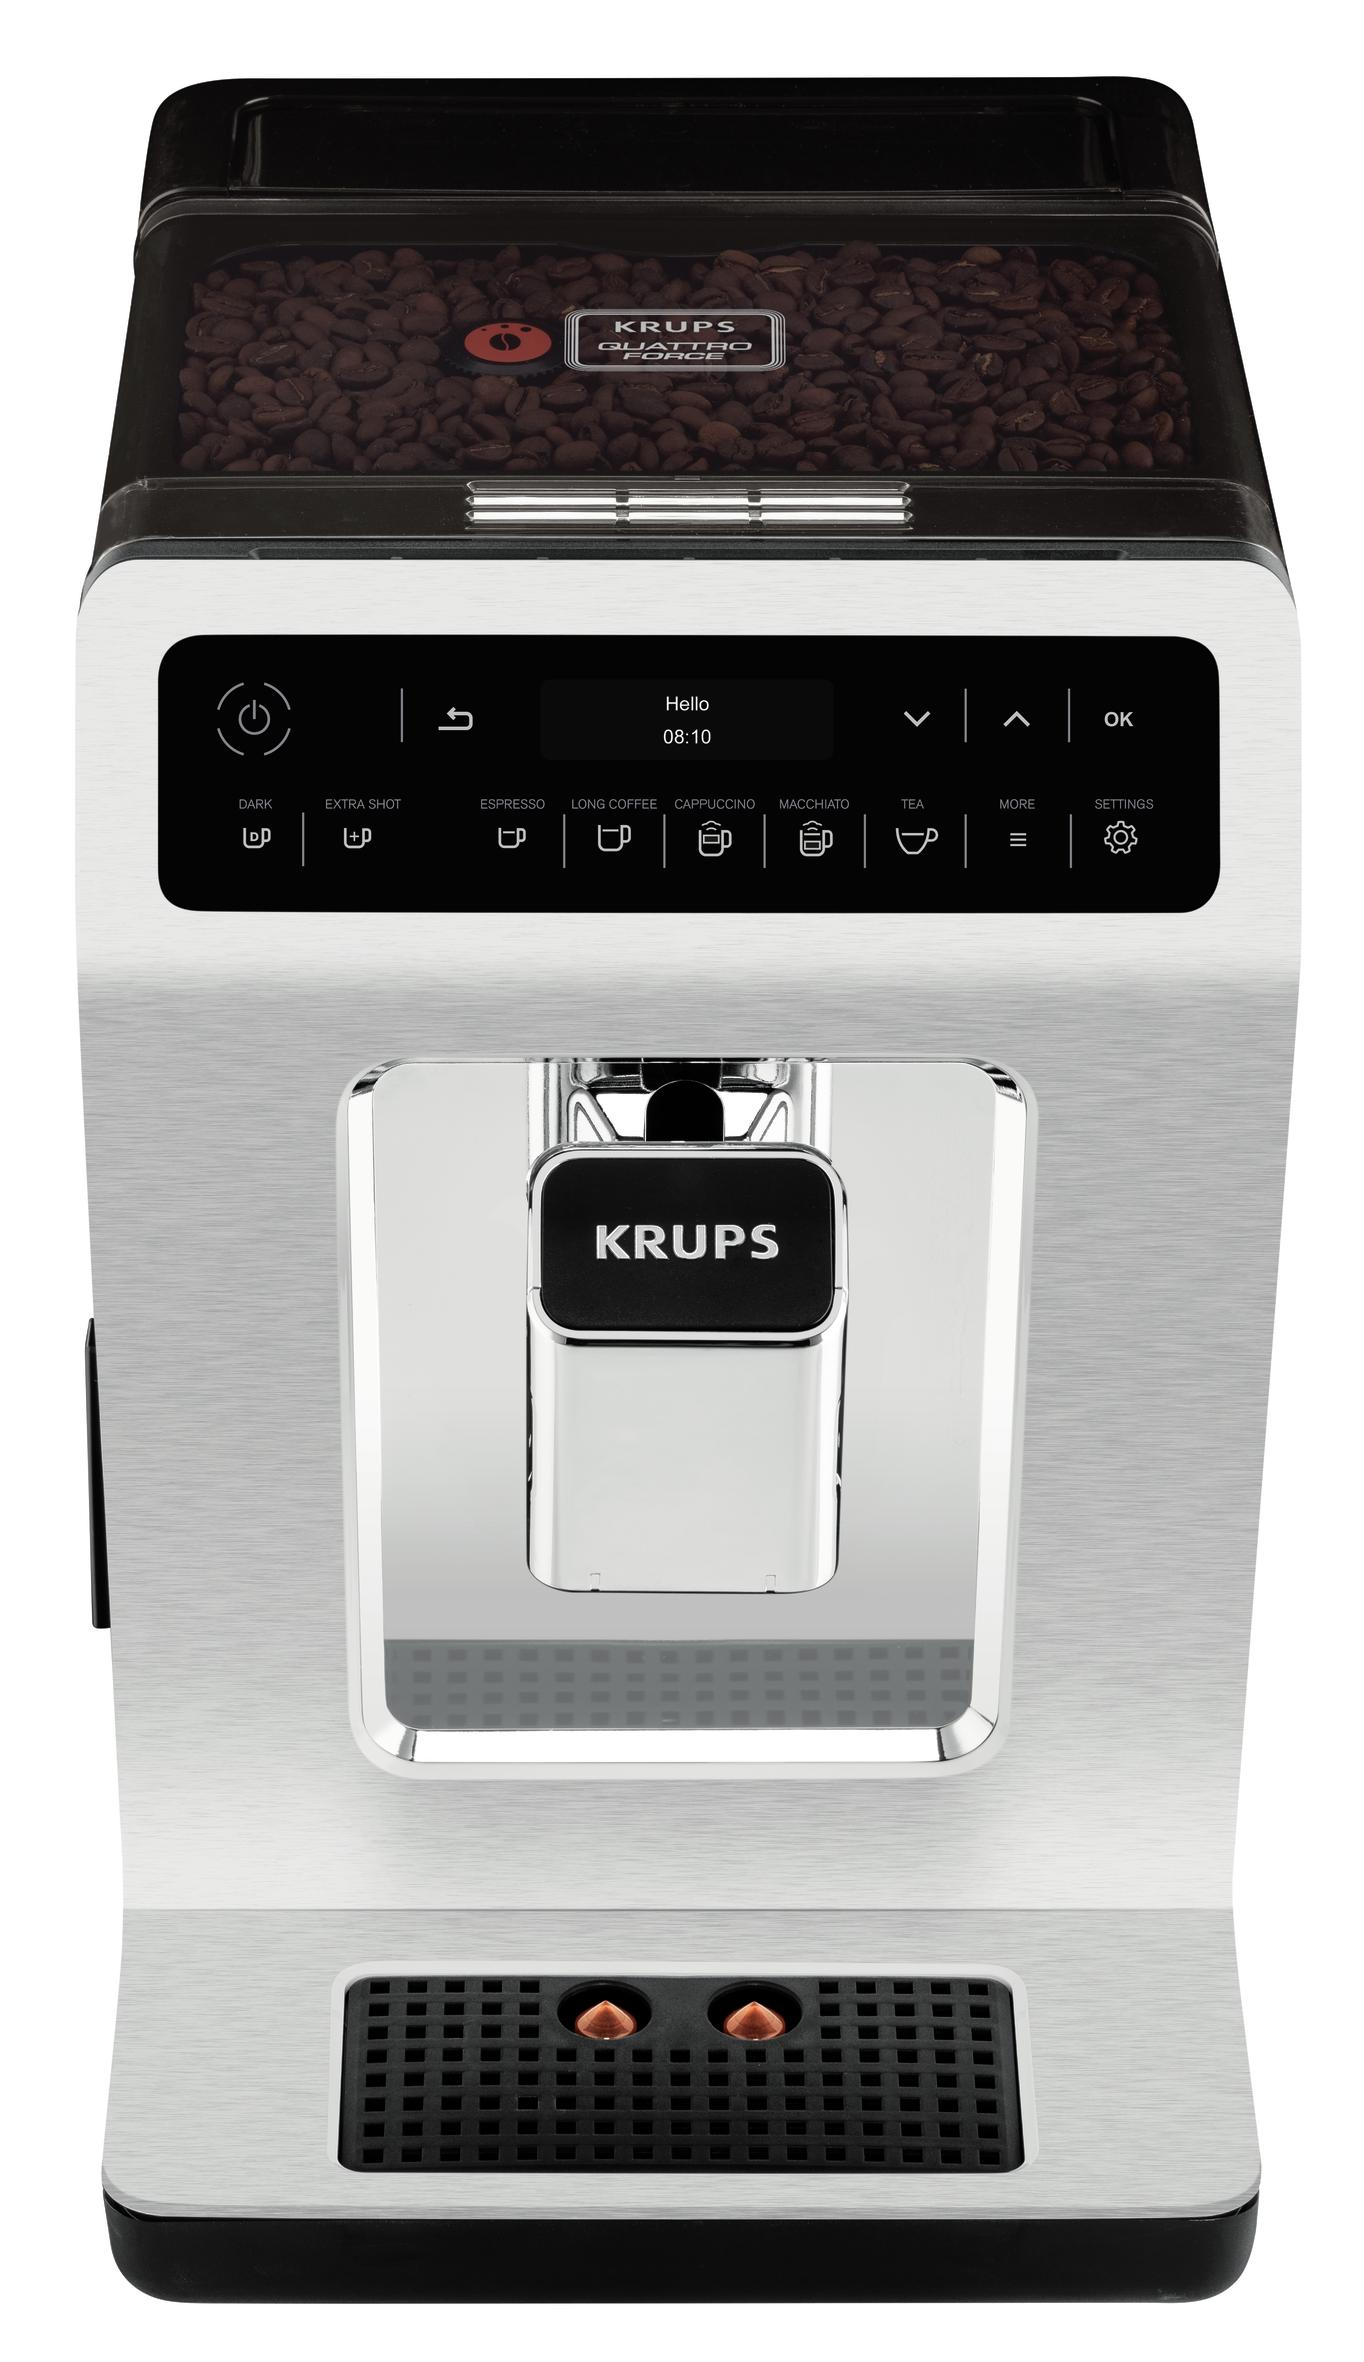 Krups Evidence EA891C coffee maker